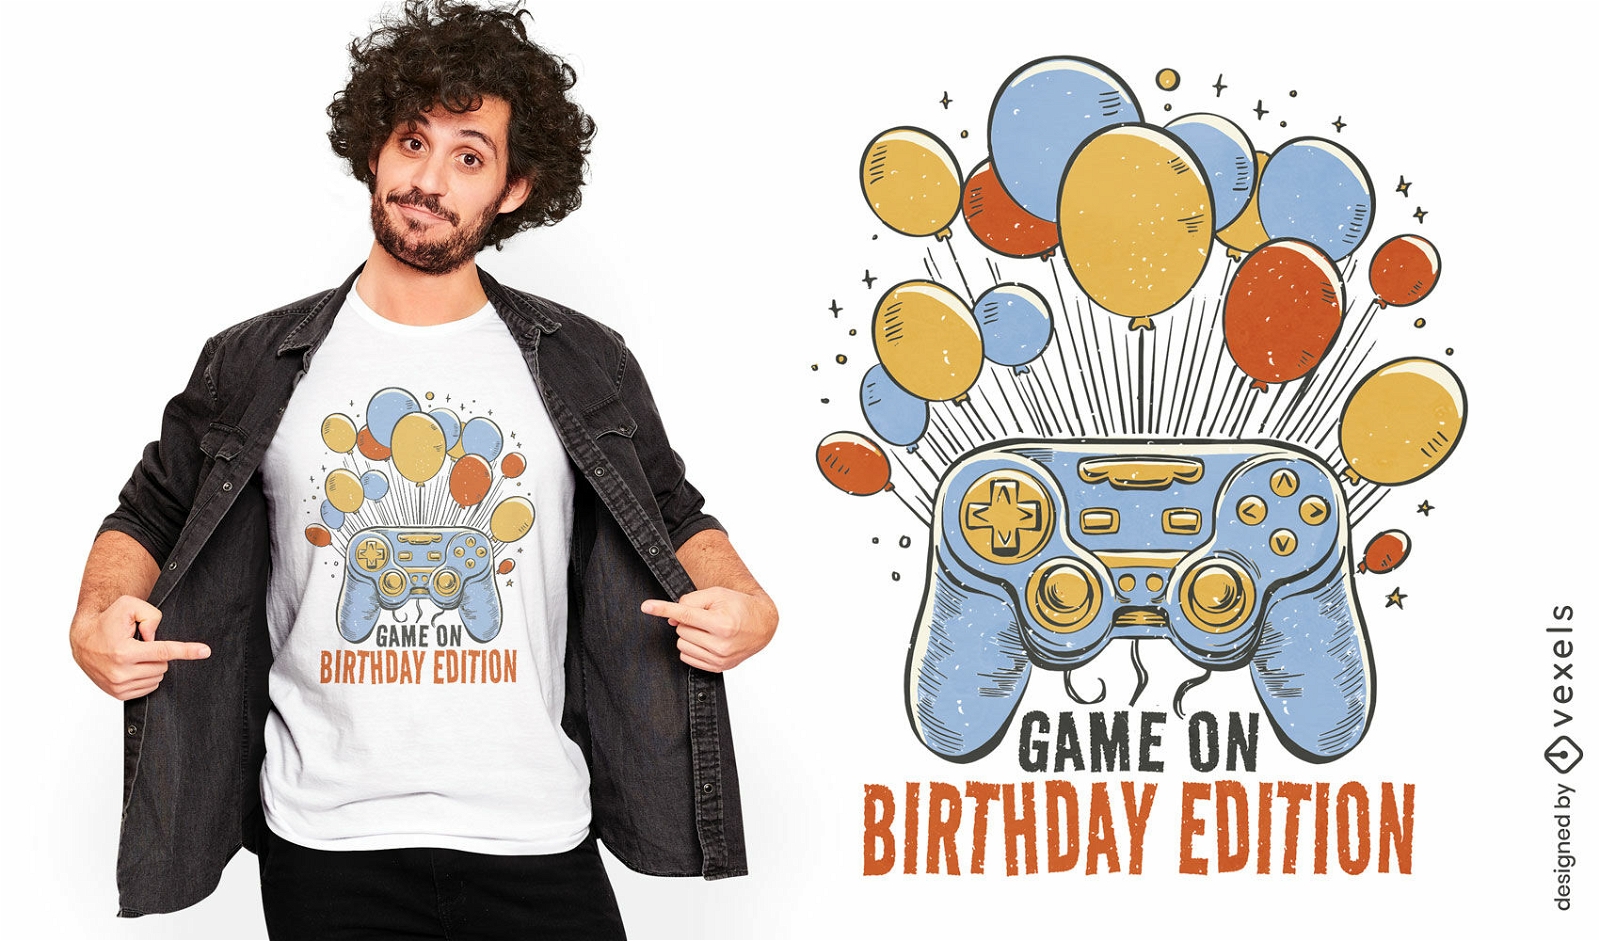 Game on birthday t-shirt design